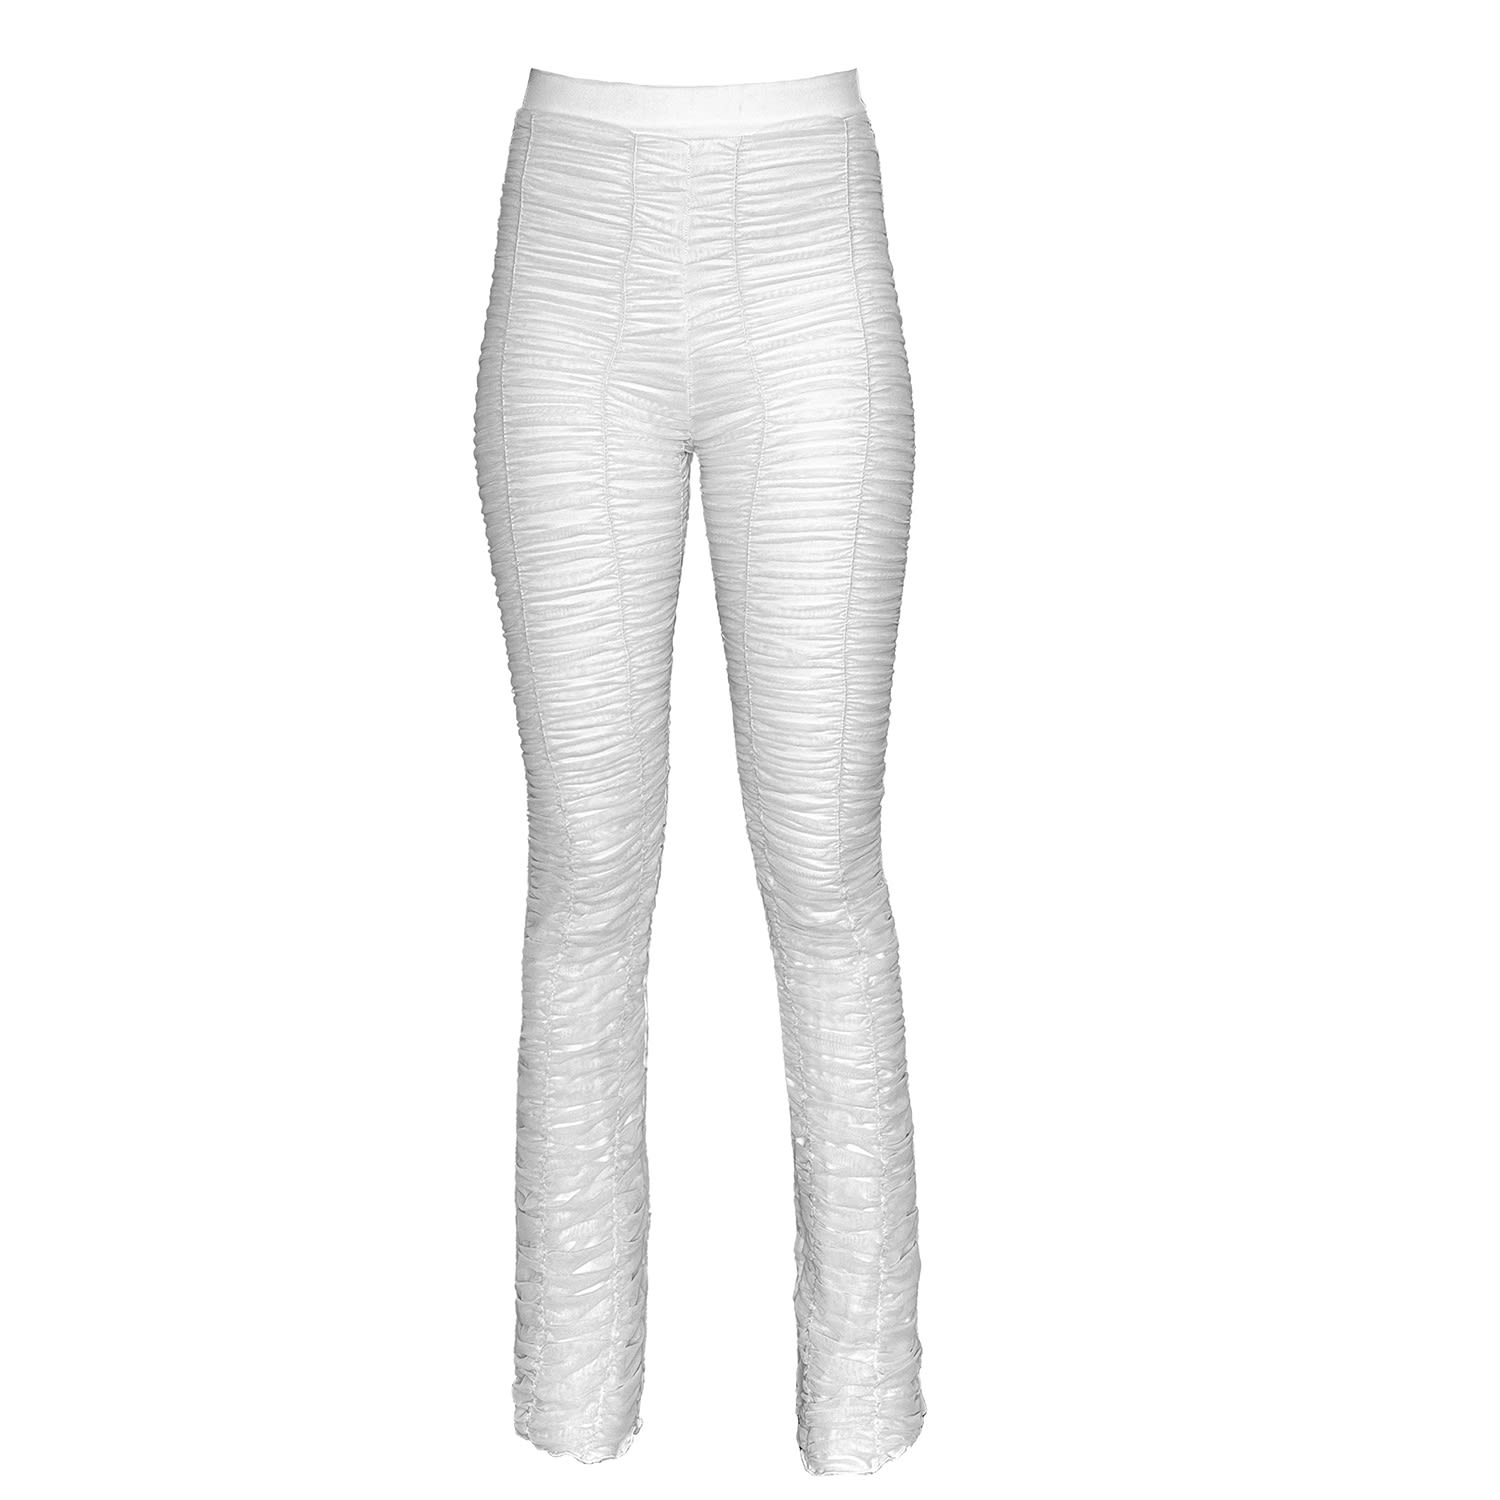 By Noa Rawitz Women's Shirred Mesh Tight Long Pants- White